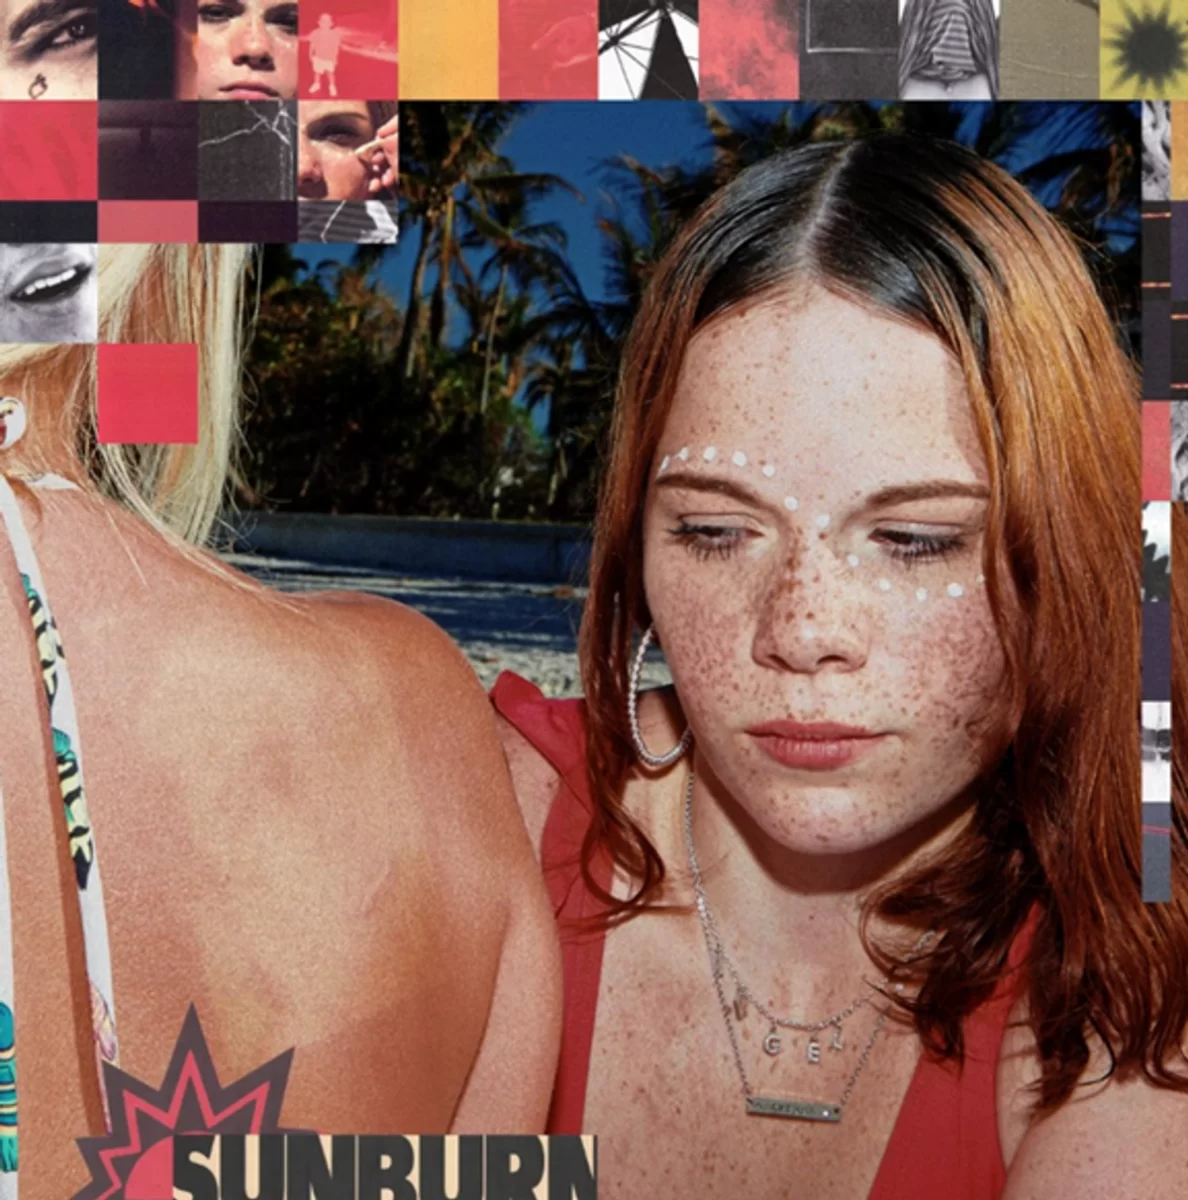 Album+Review+%7C+Sunburn+by+Dominic+Fike